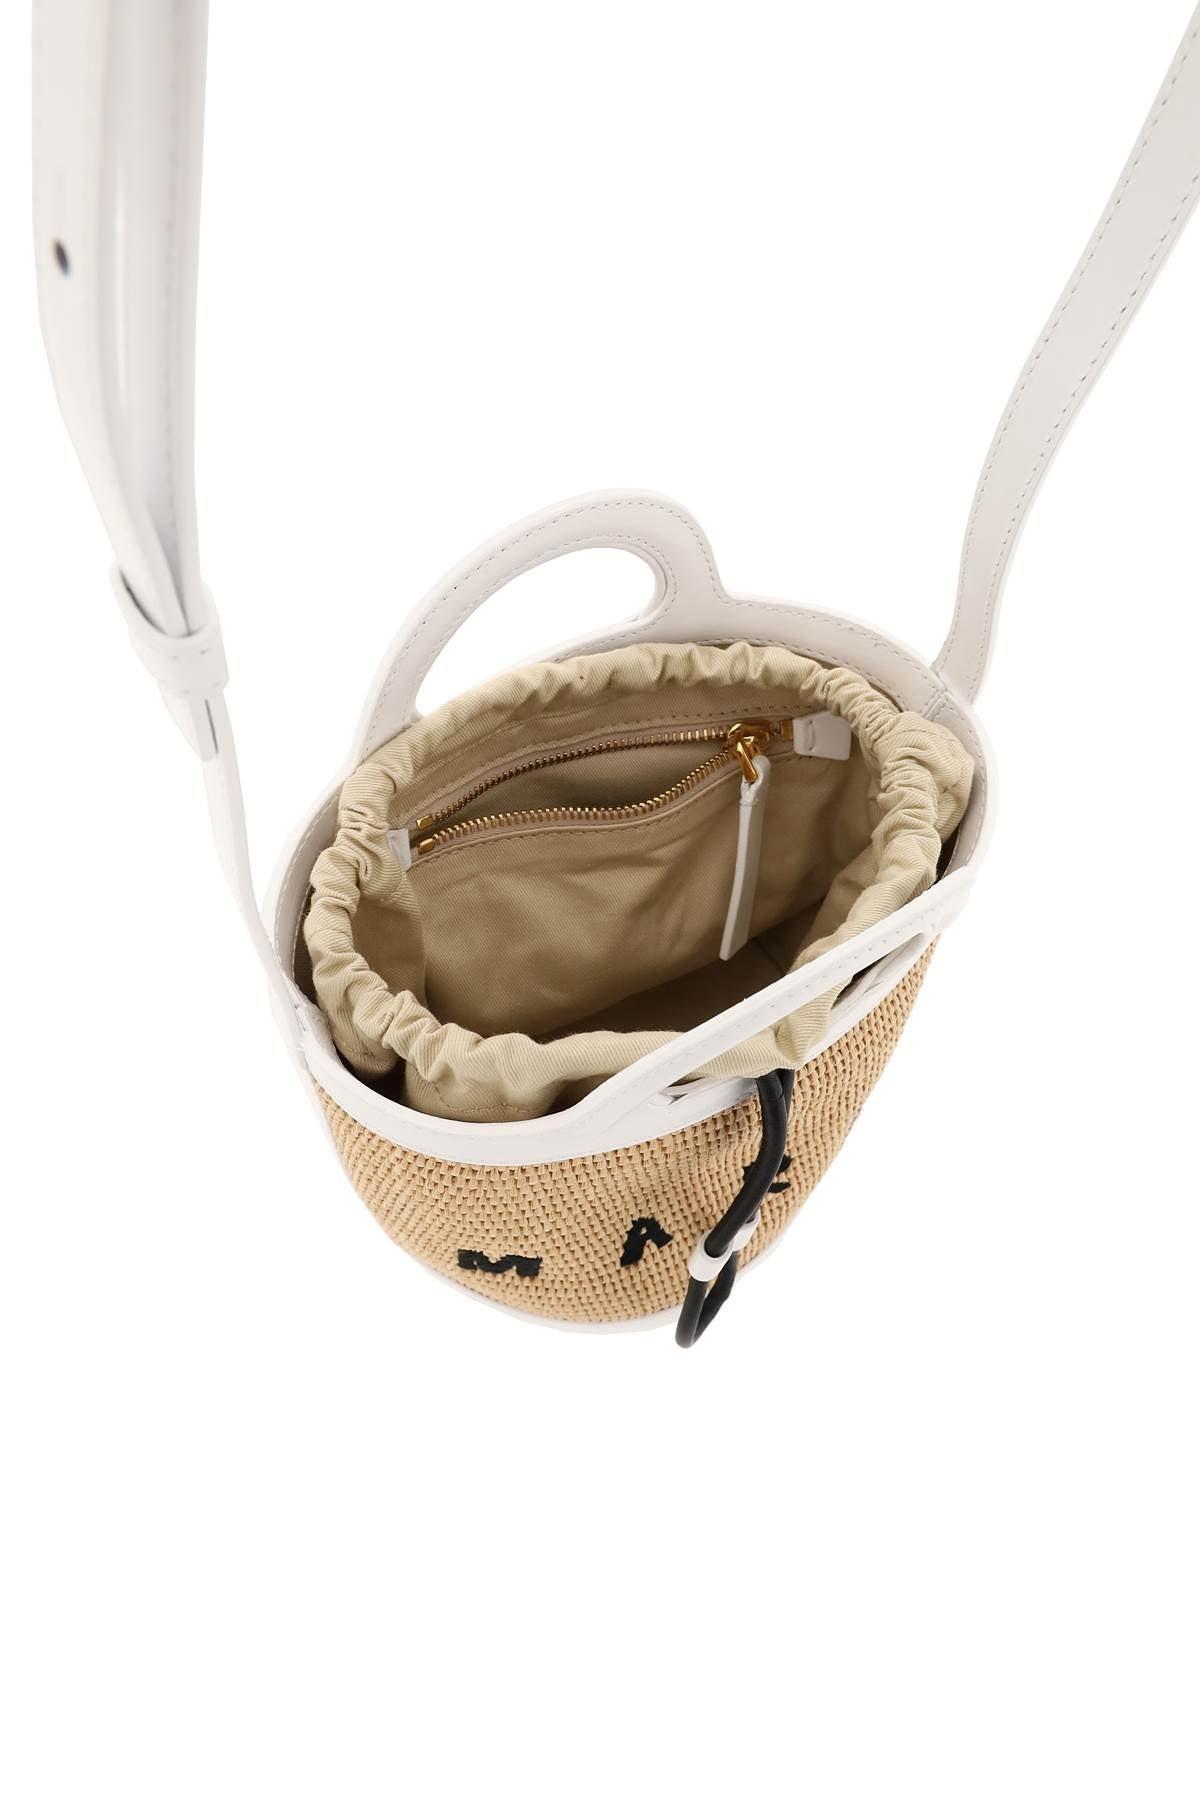 Marni Raffia And Leather Tropicalia Bucket Bag in Natural | Lyst